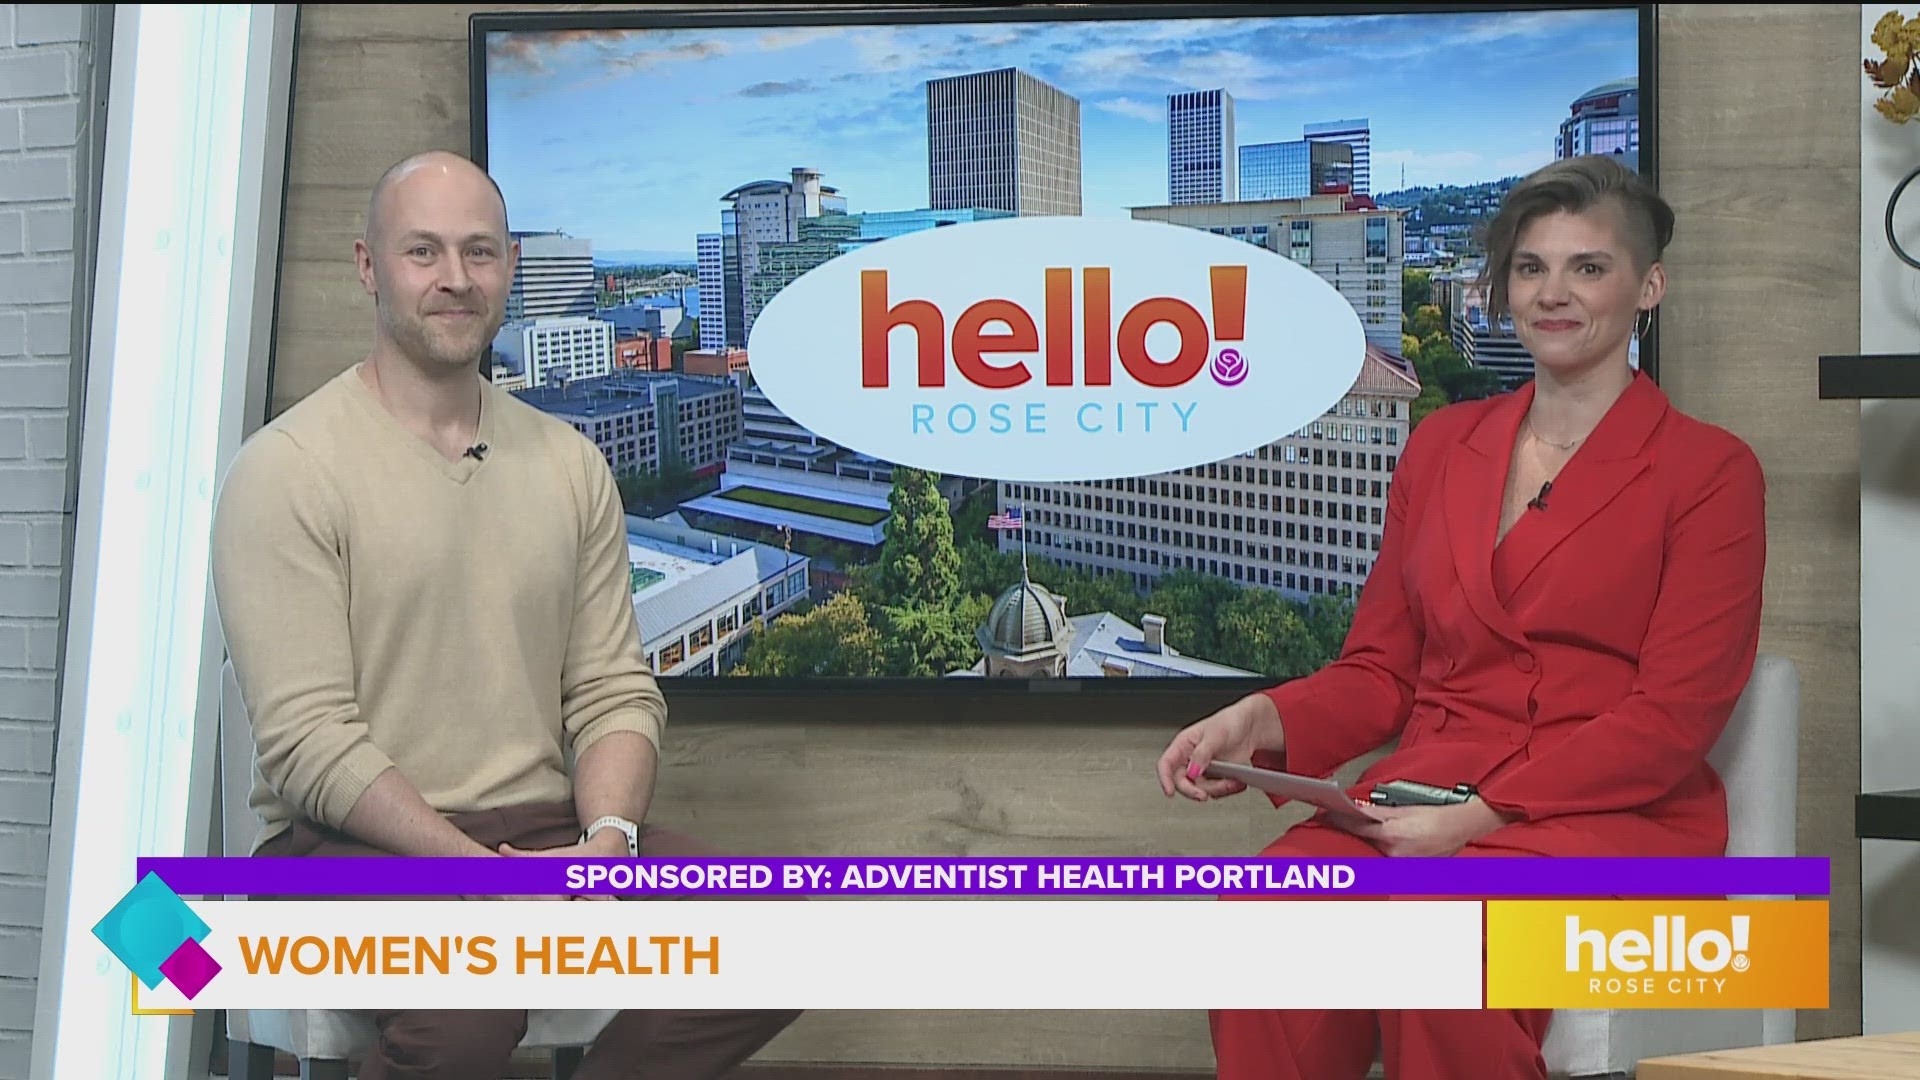 This segment is sponsored by Adventist Health Portland